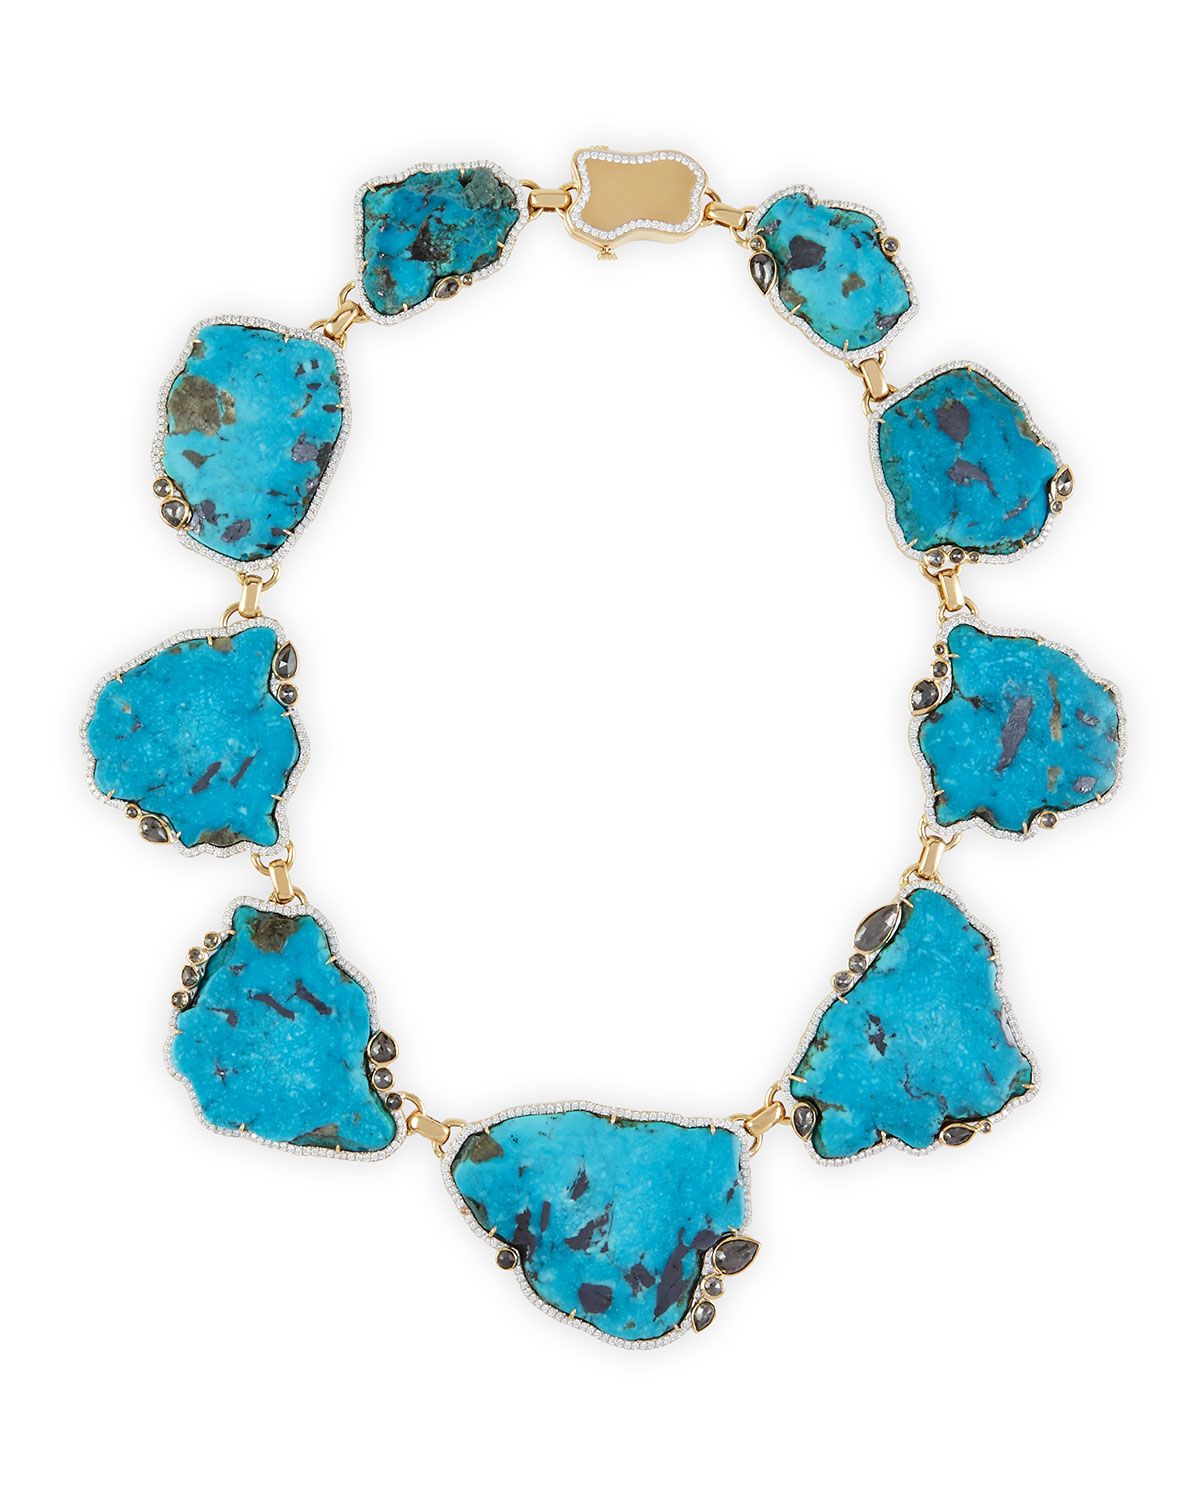 pamela huizenga 18k gold turquoise necklace with diamonds product 1 170937415 normal